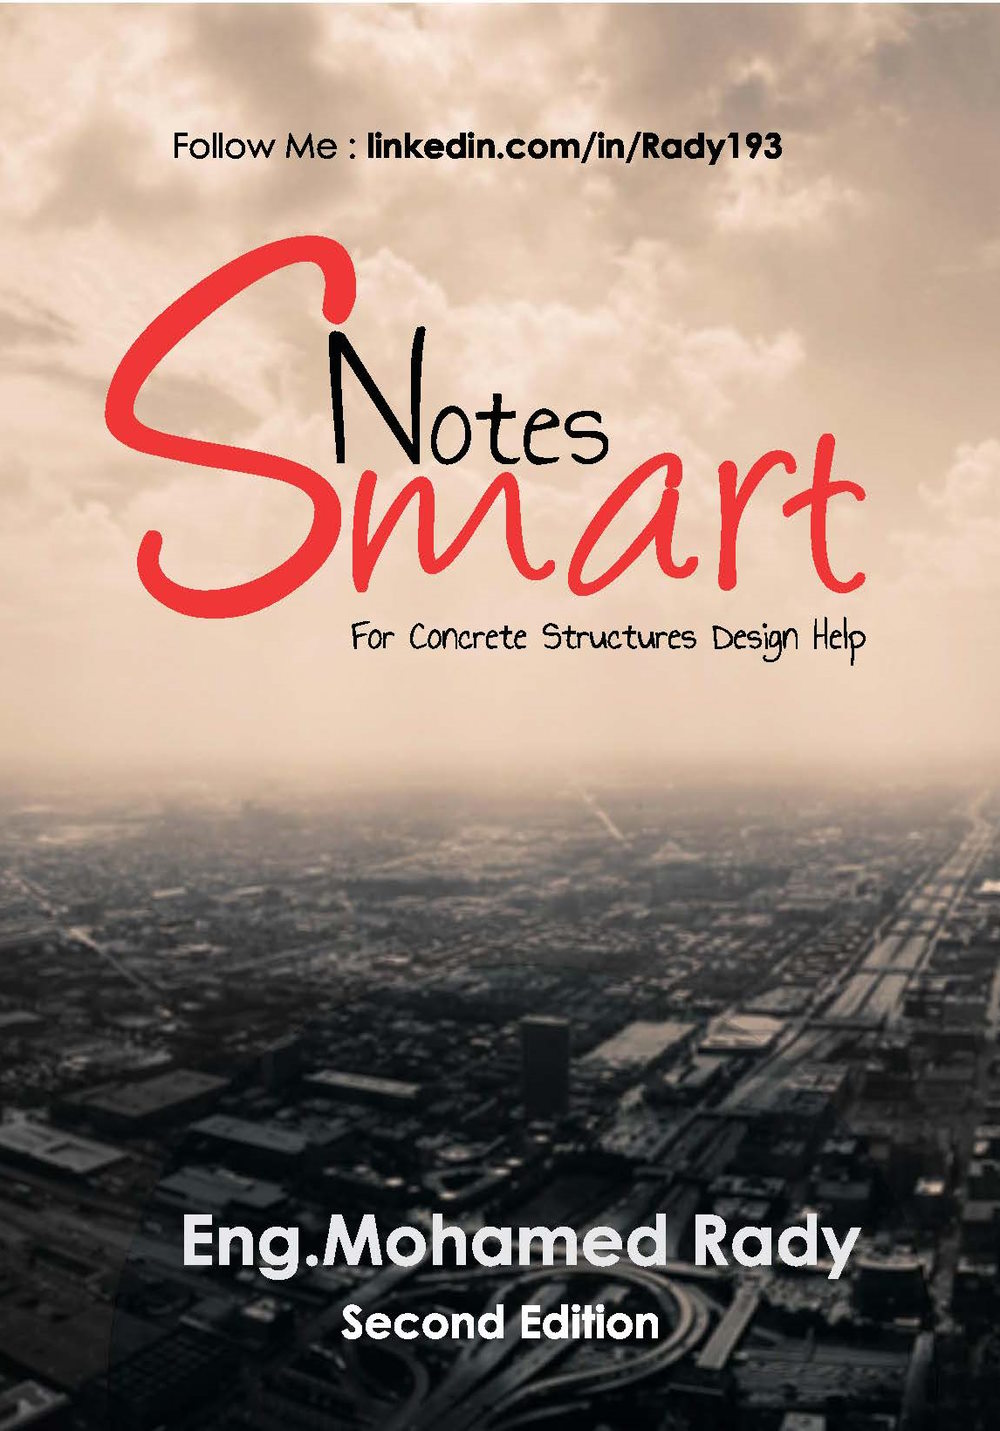 Smart Notes for concrete structures design help